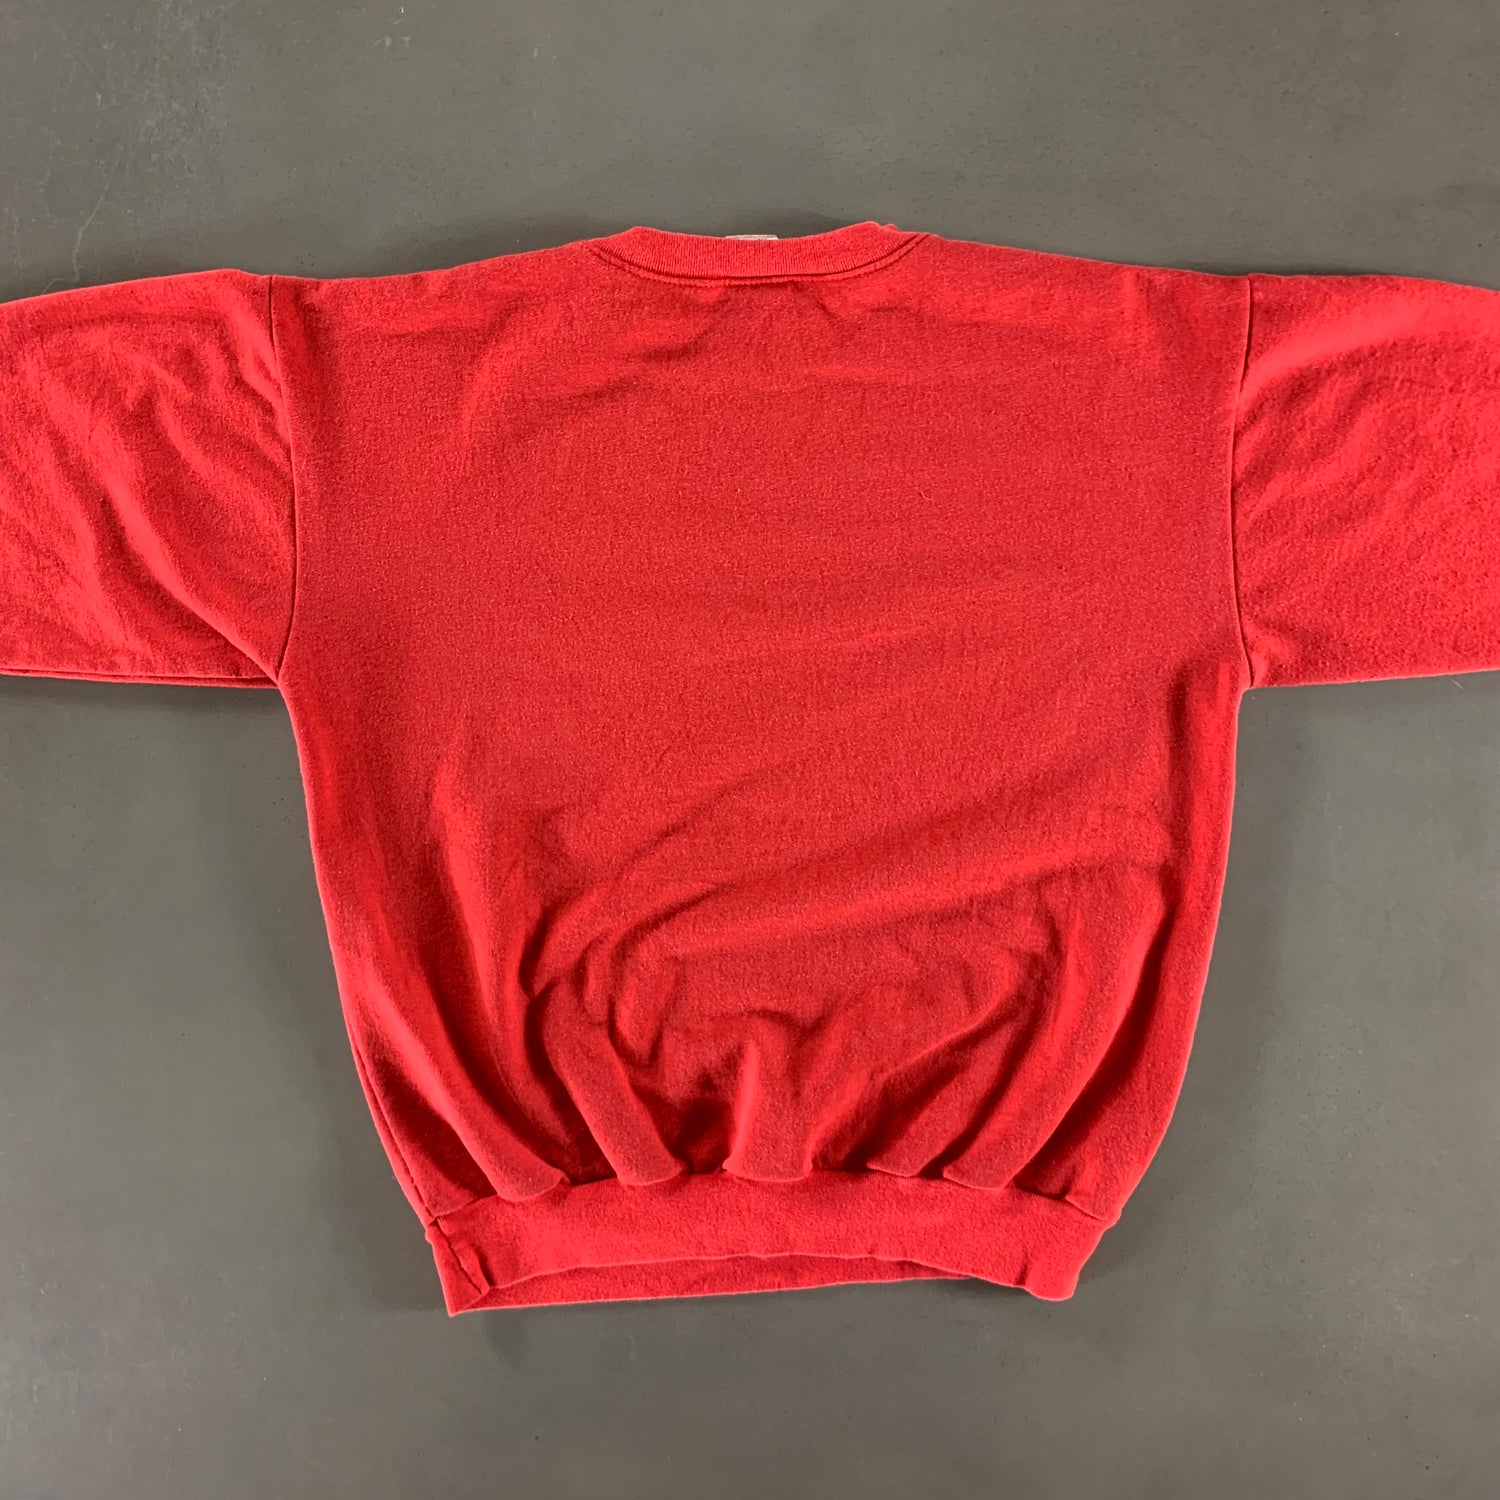 Vintage 1980s Golden Age Club Sweatshirt size Medium